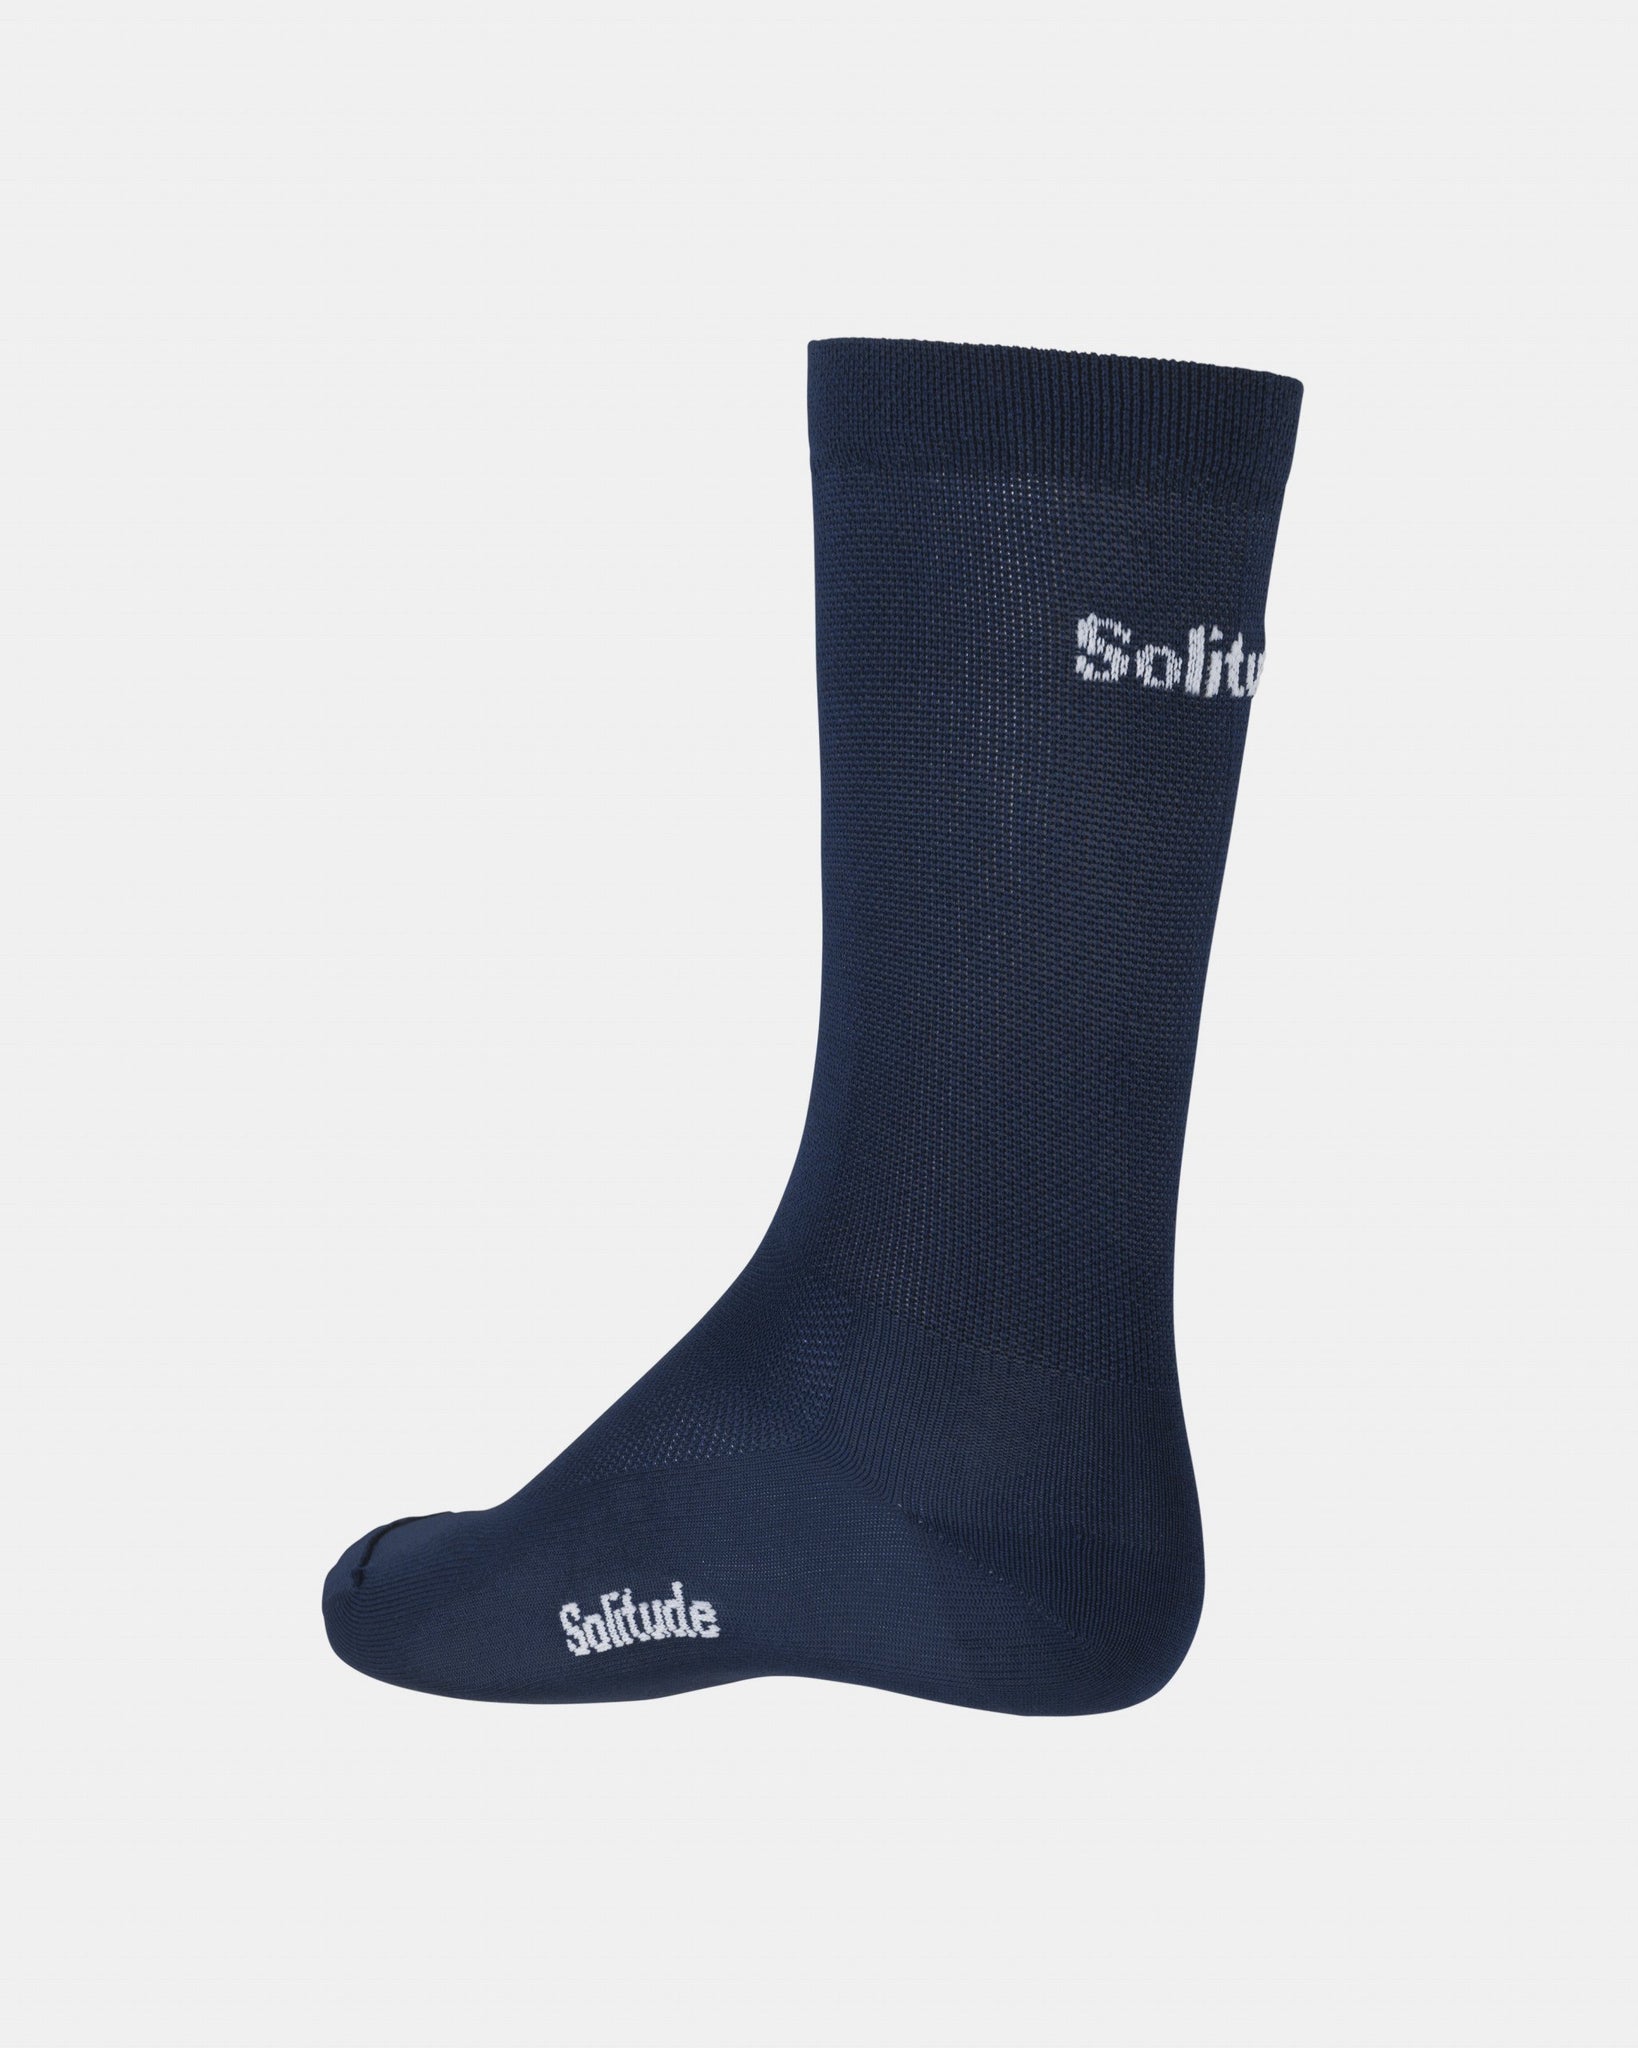 Solitude Socks - Navy